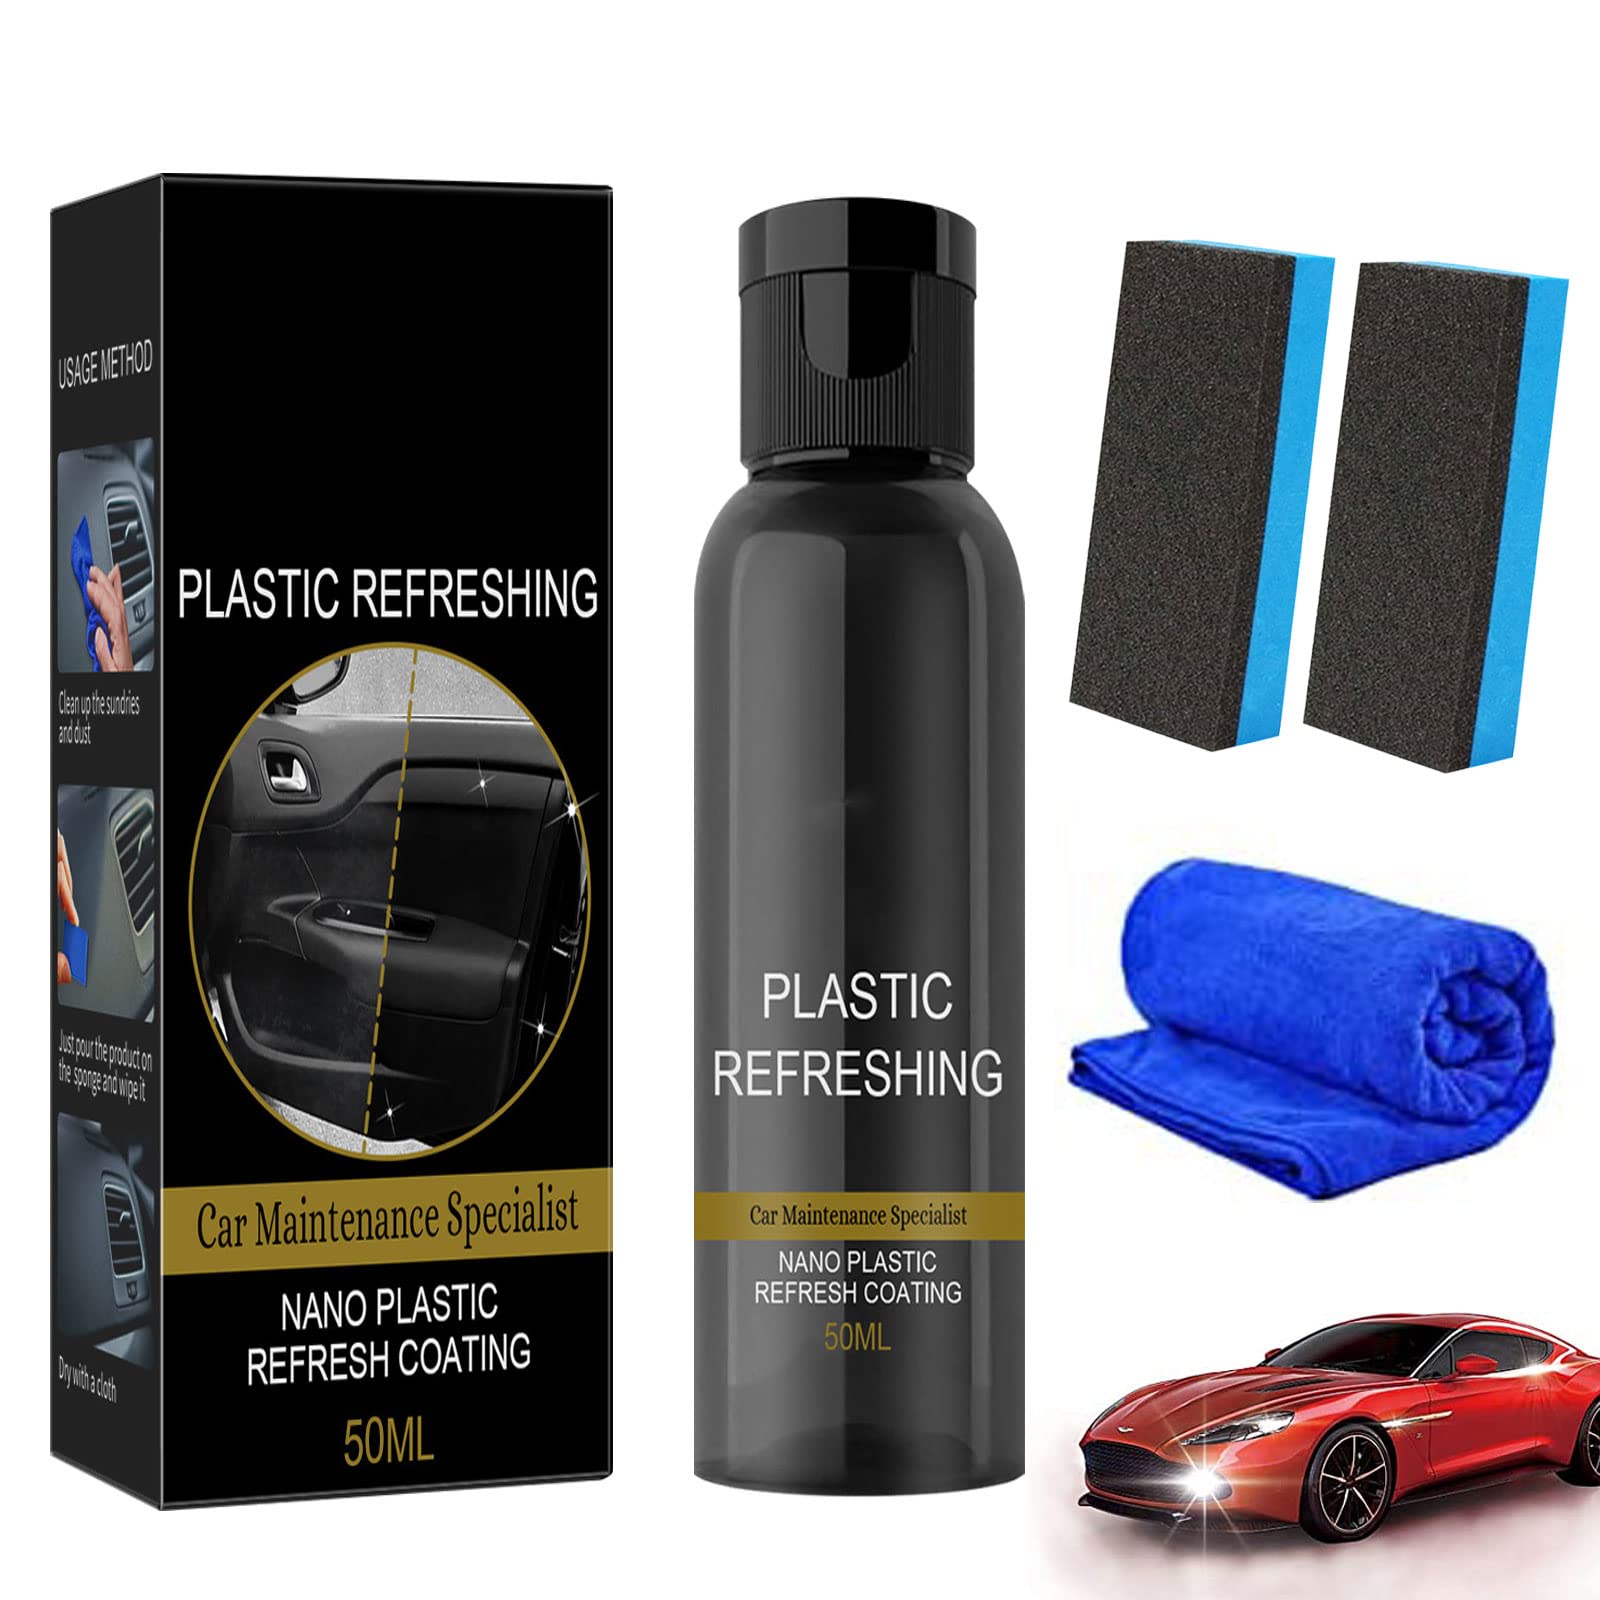 HIDRUO Ultishine Plastic Revitalizing Coating Agent Set, Plastic Refreshing Car Black, Powerful Stain Removal Kit for Car, Nano Plastic Refreshing Coating for Car Quick Restorer (50ML, 1PCS) von HIDRUO